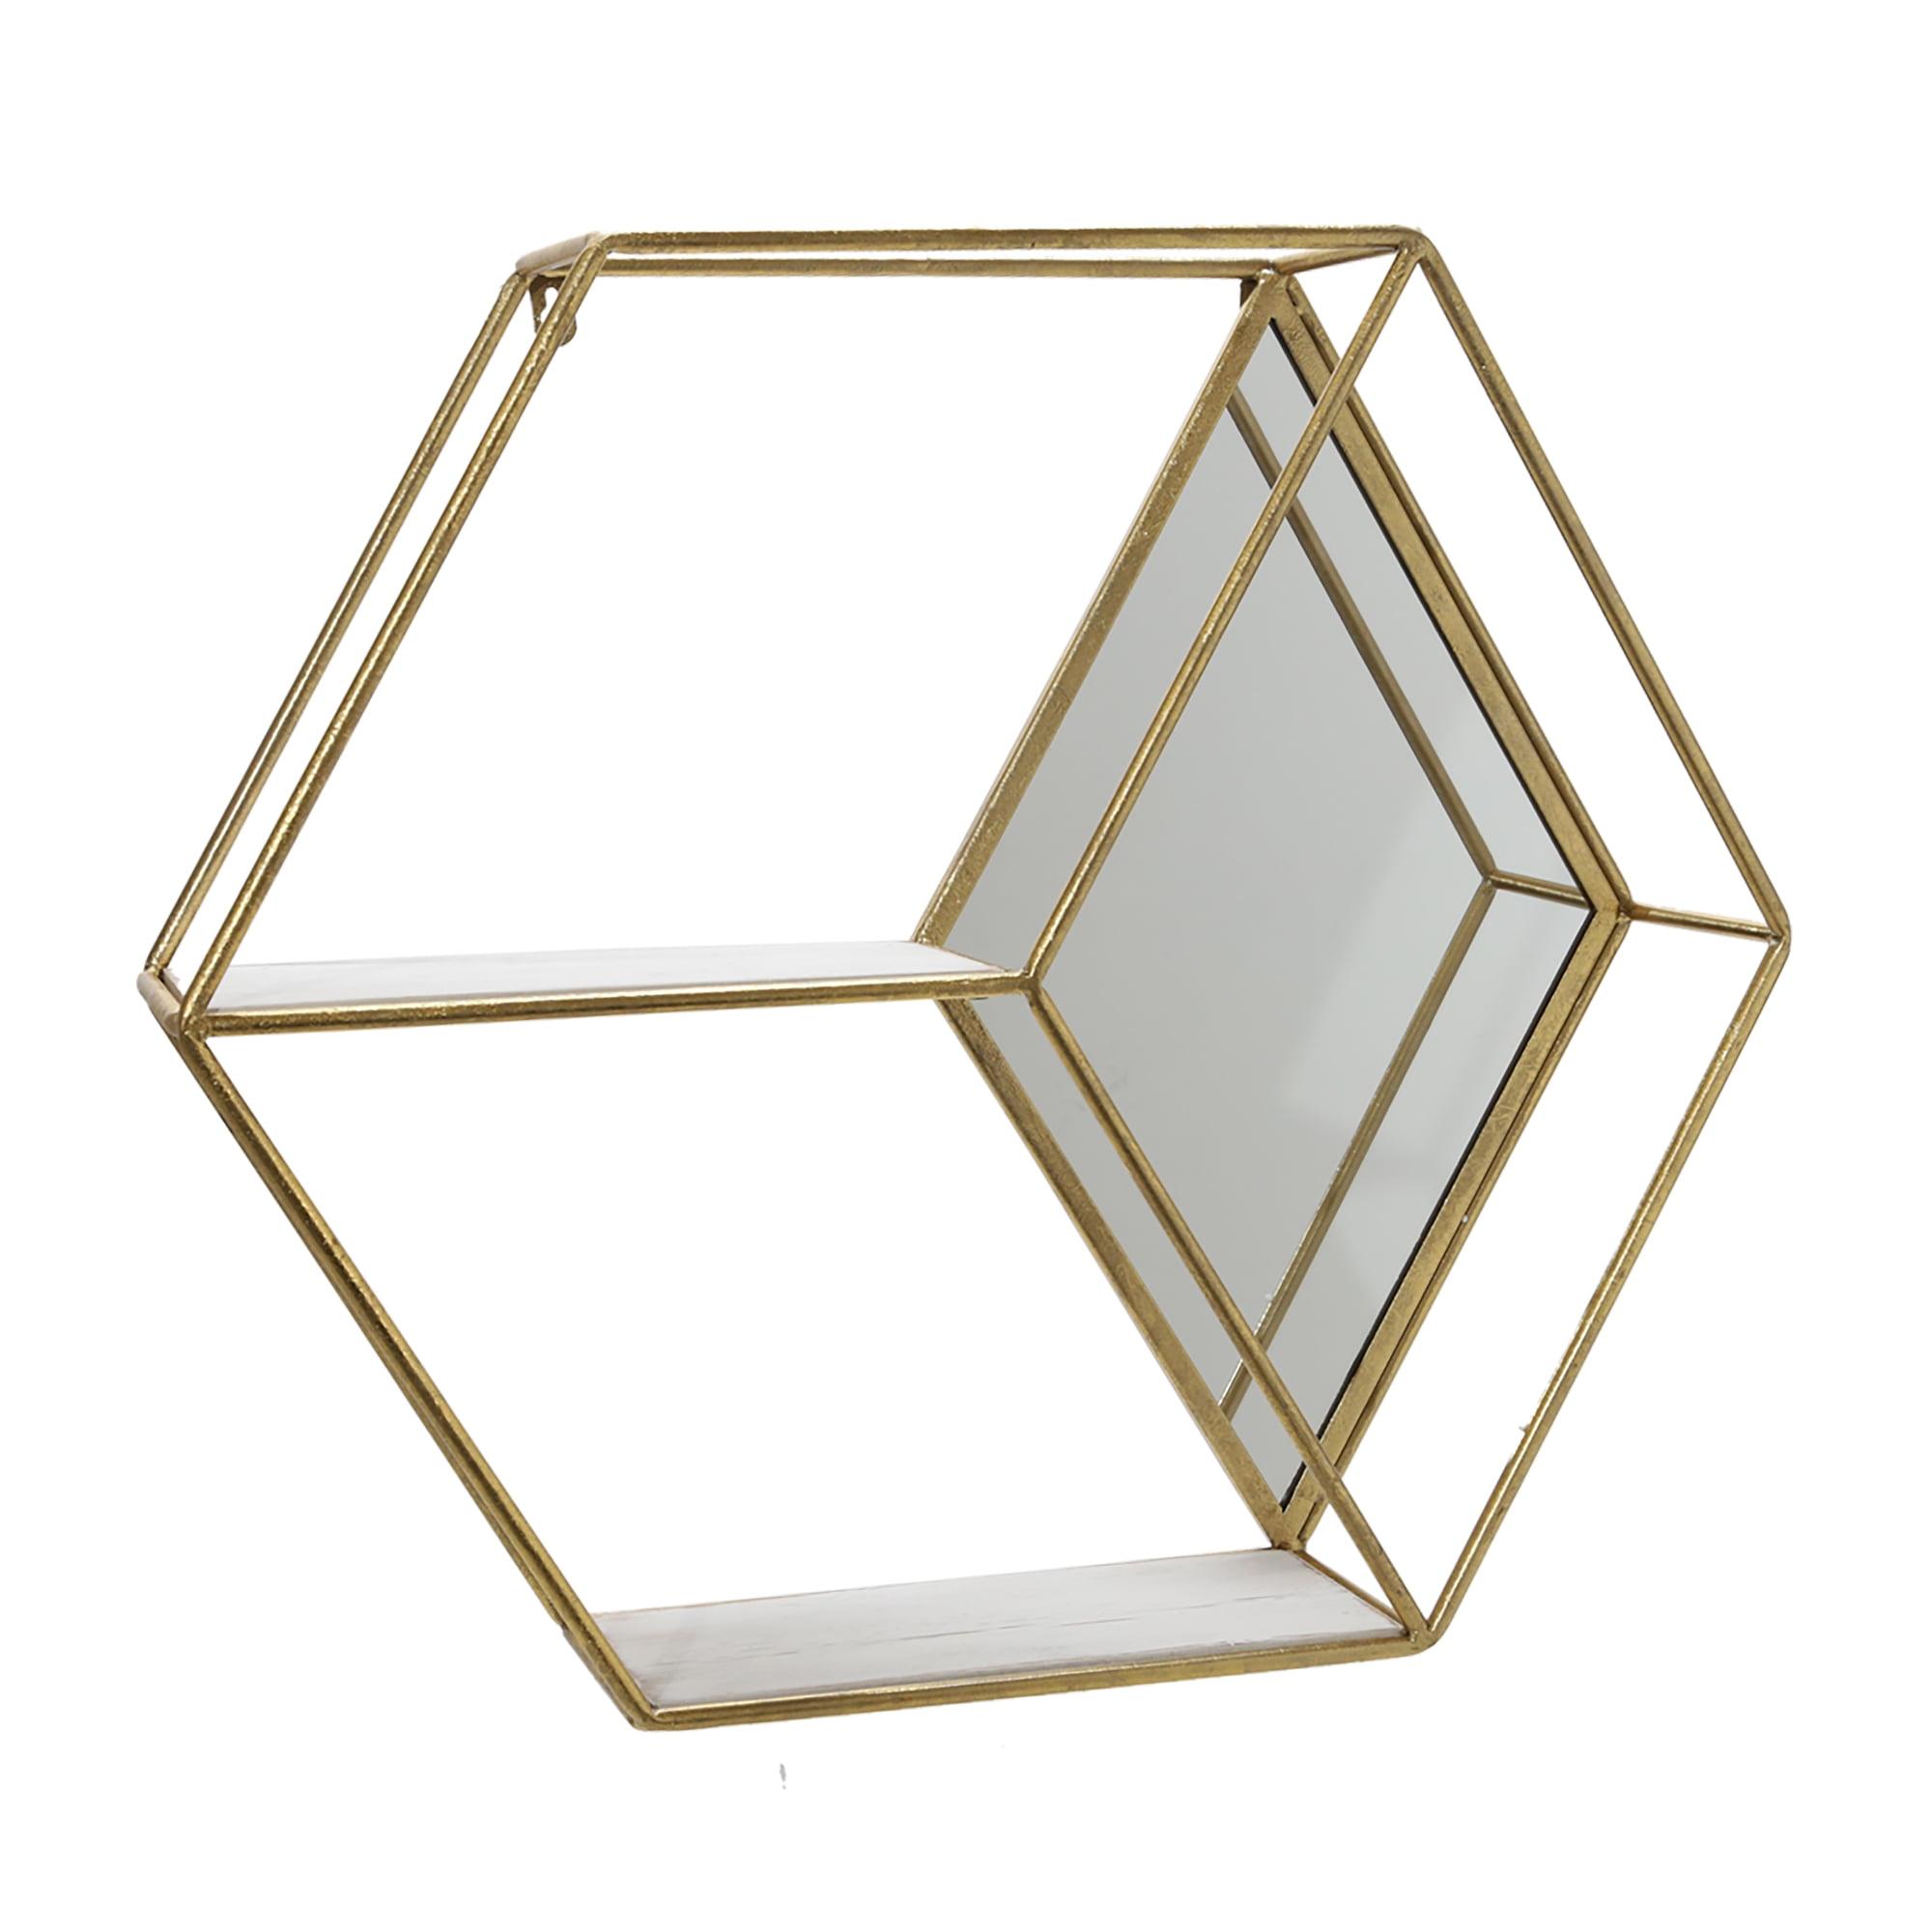 Elegant Gold Hexagon Floating Wall Shelf with Mirror